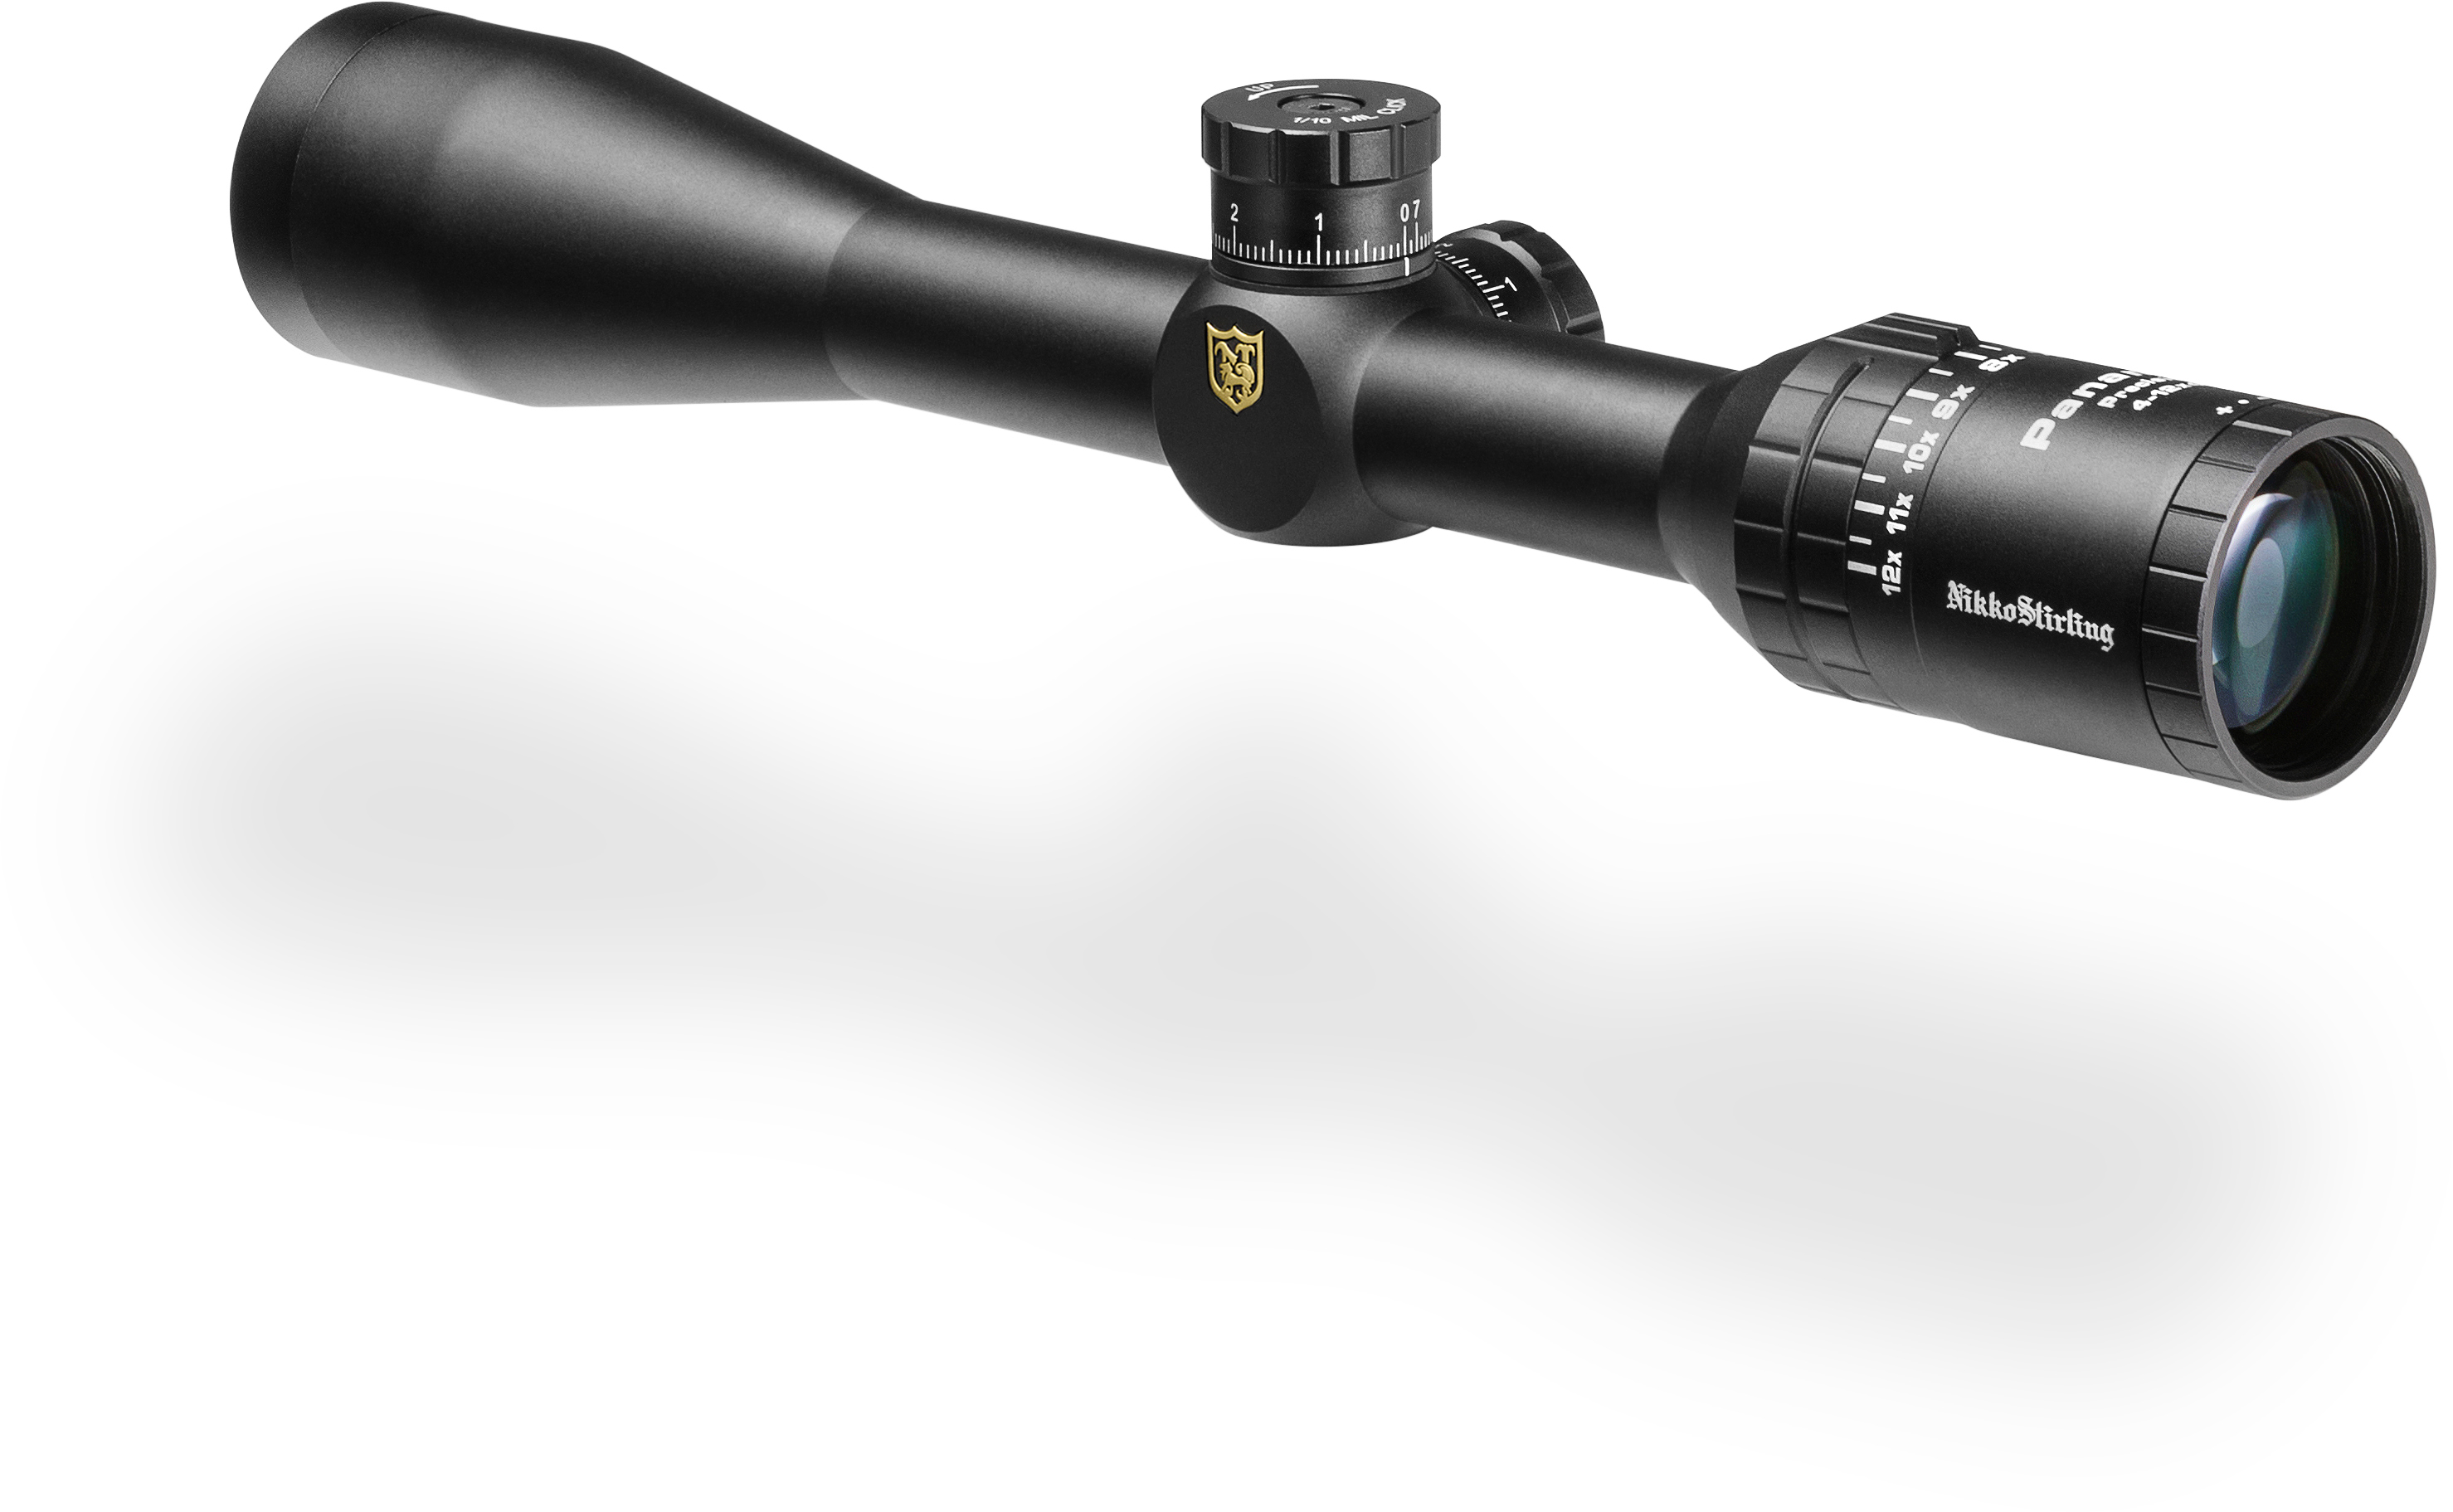 Nikko Stirling Panamax Precision 4-12x40 HMD Rifle Scope